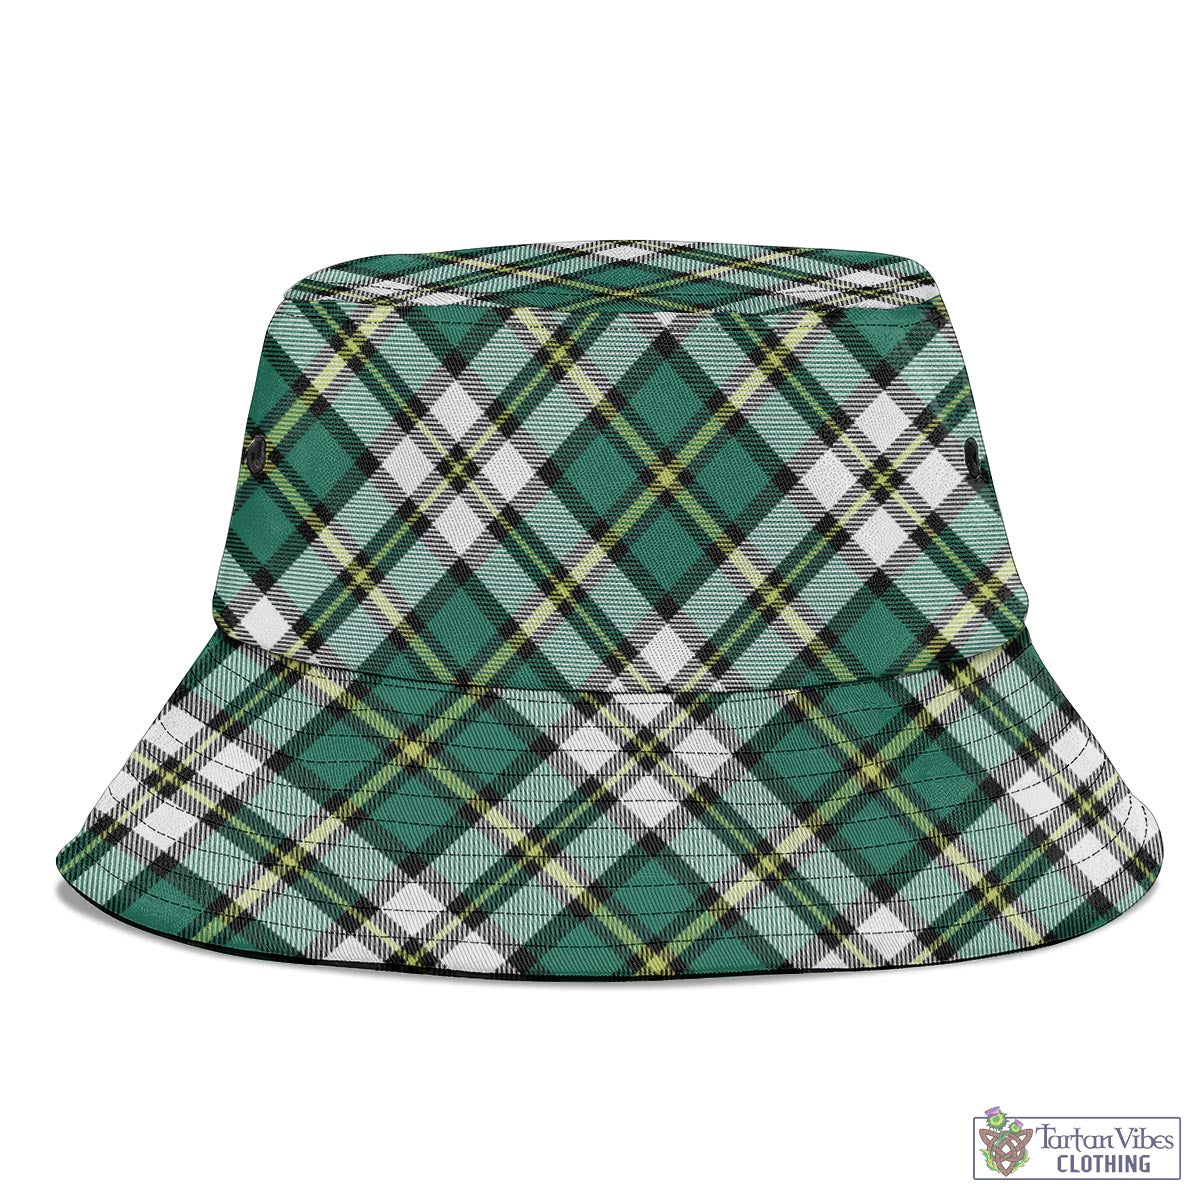 Tartan Vibes Clothing Cape Breton Island Canada Tartan Bucket Hat